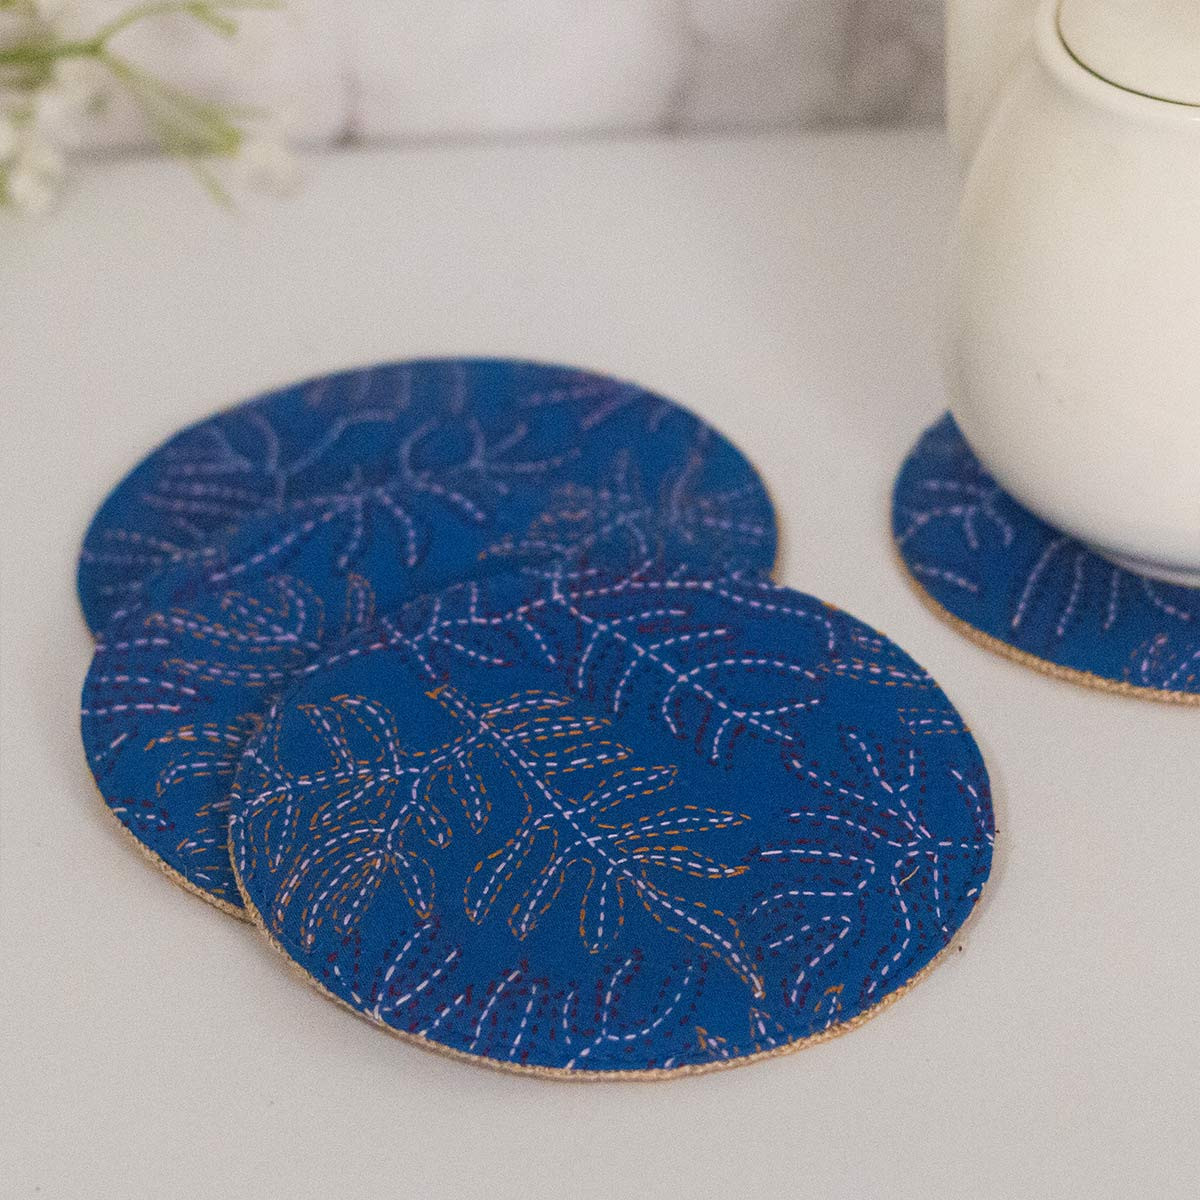 Kantha-stitched Coasters (Set of 4)